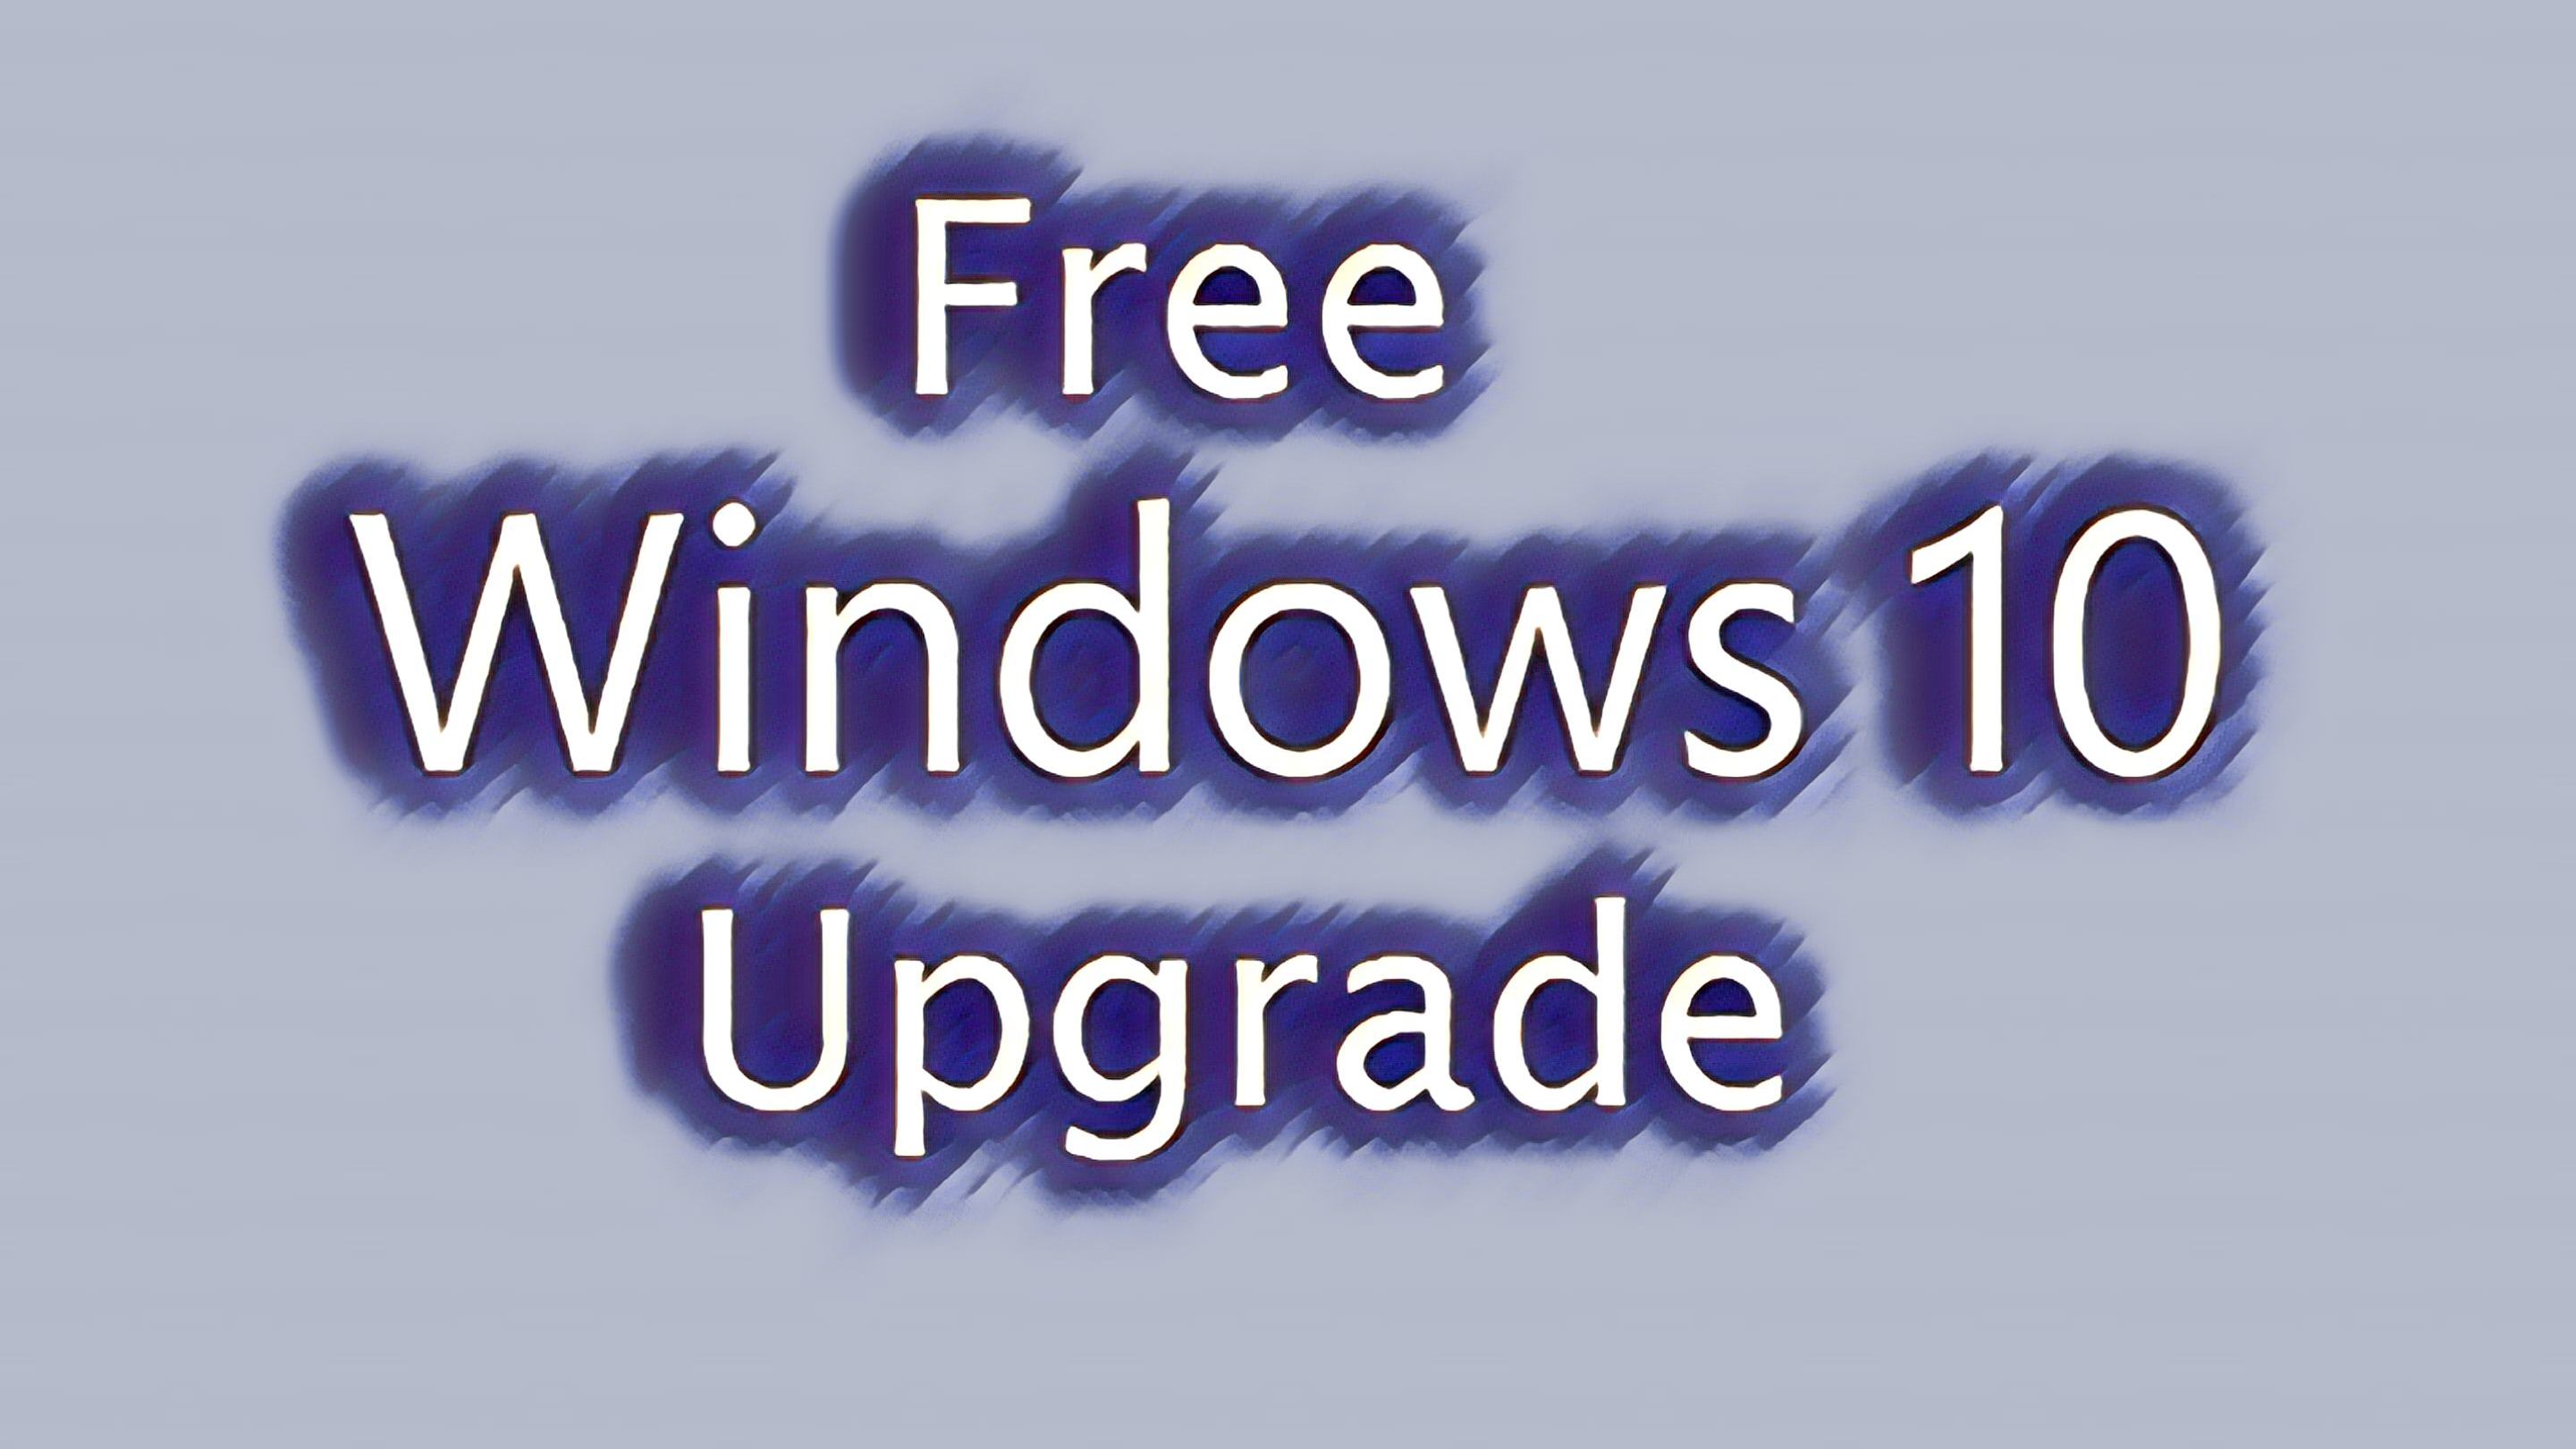 update to windows 10 free